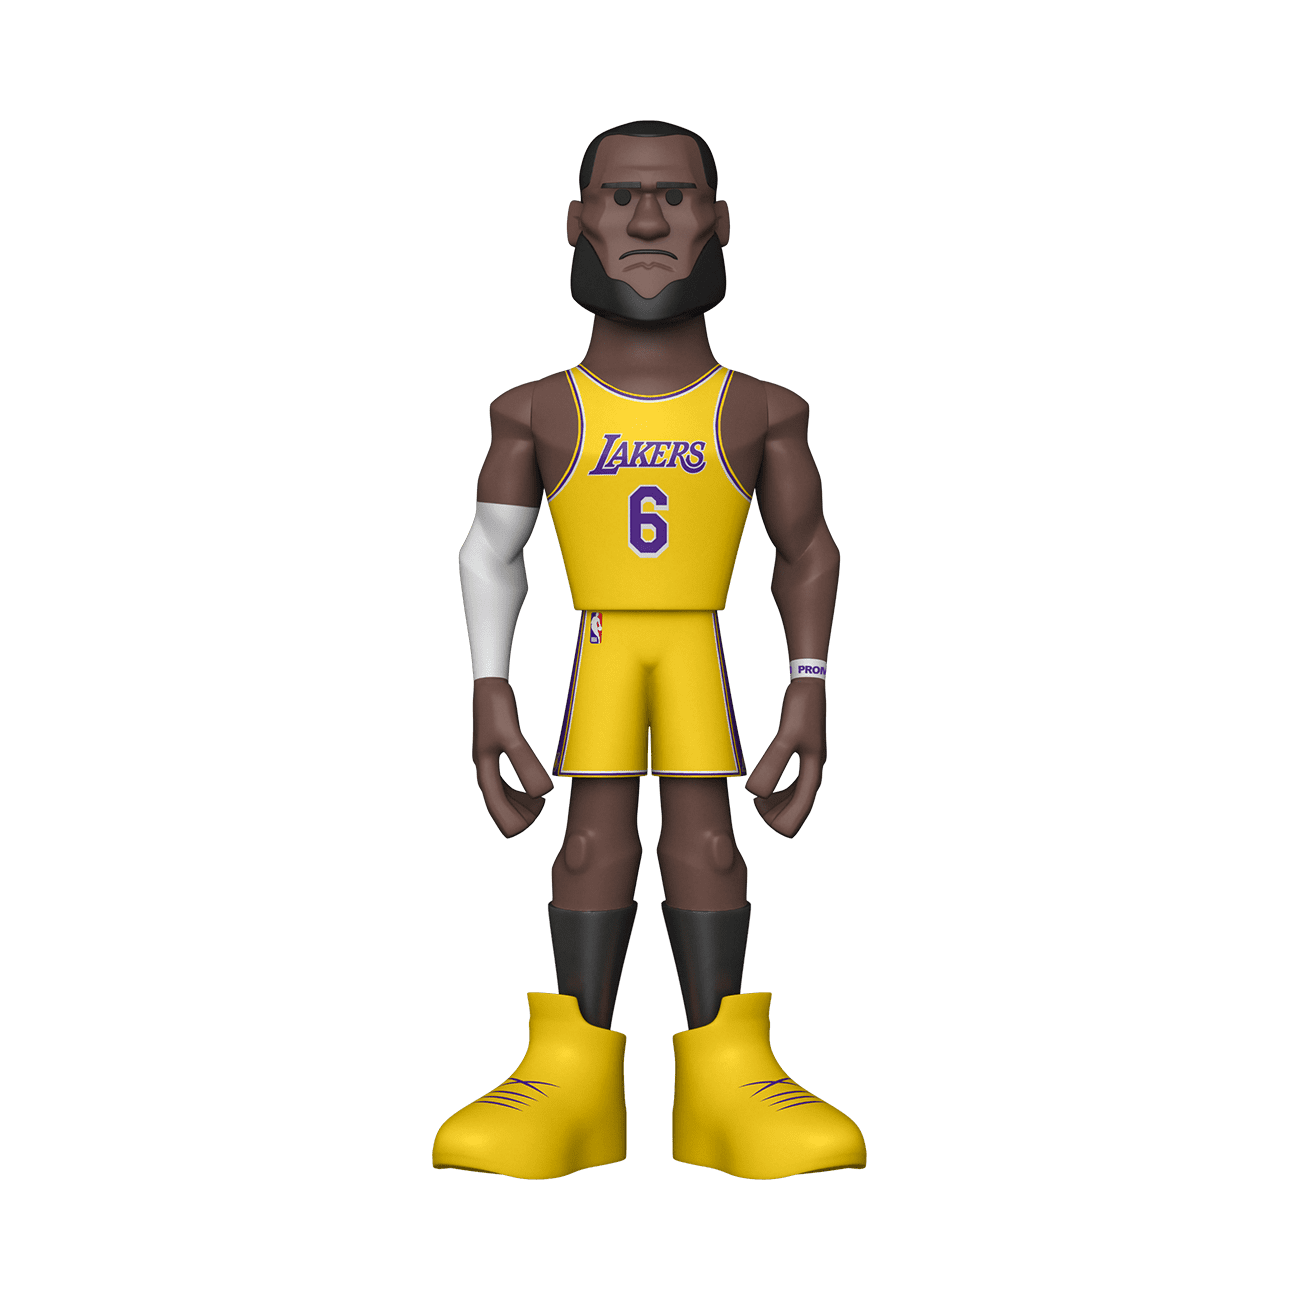 Funko Pop! NBA - Lebron James 10” ( Yellow Jersey ) Walmart Exclusive sold  by Geek PH Store